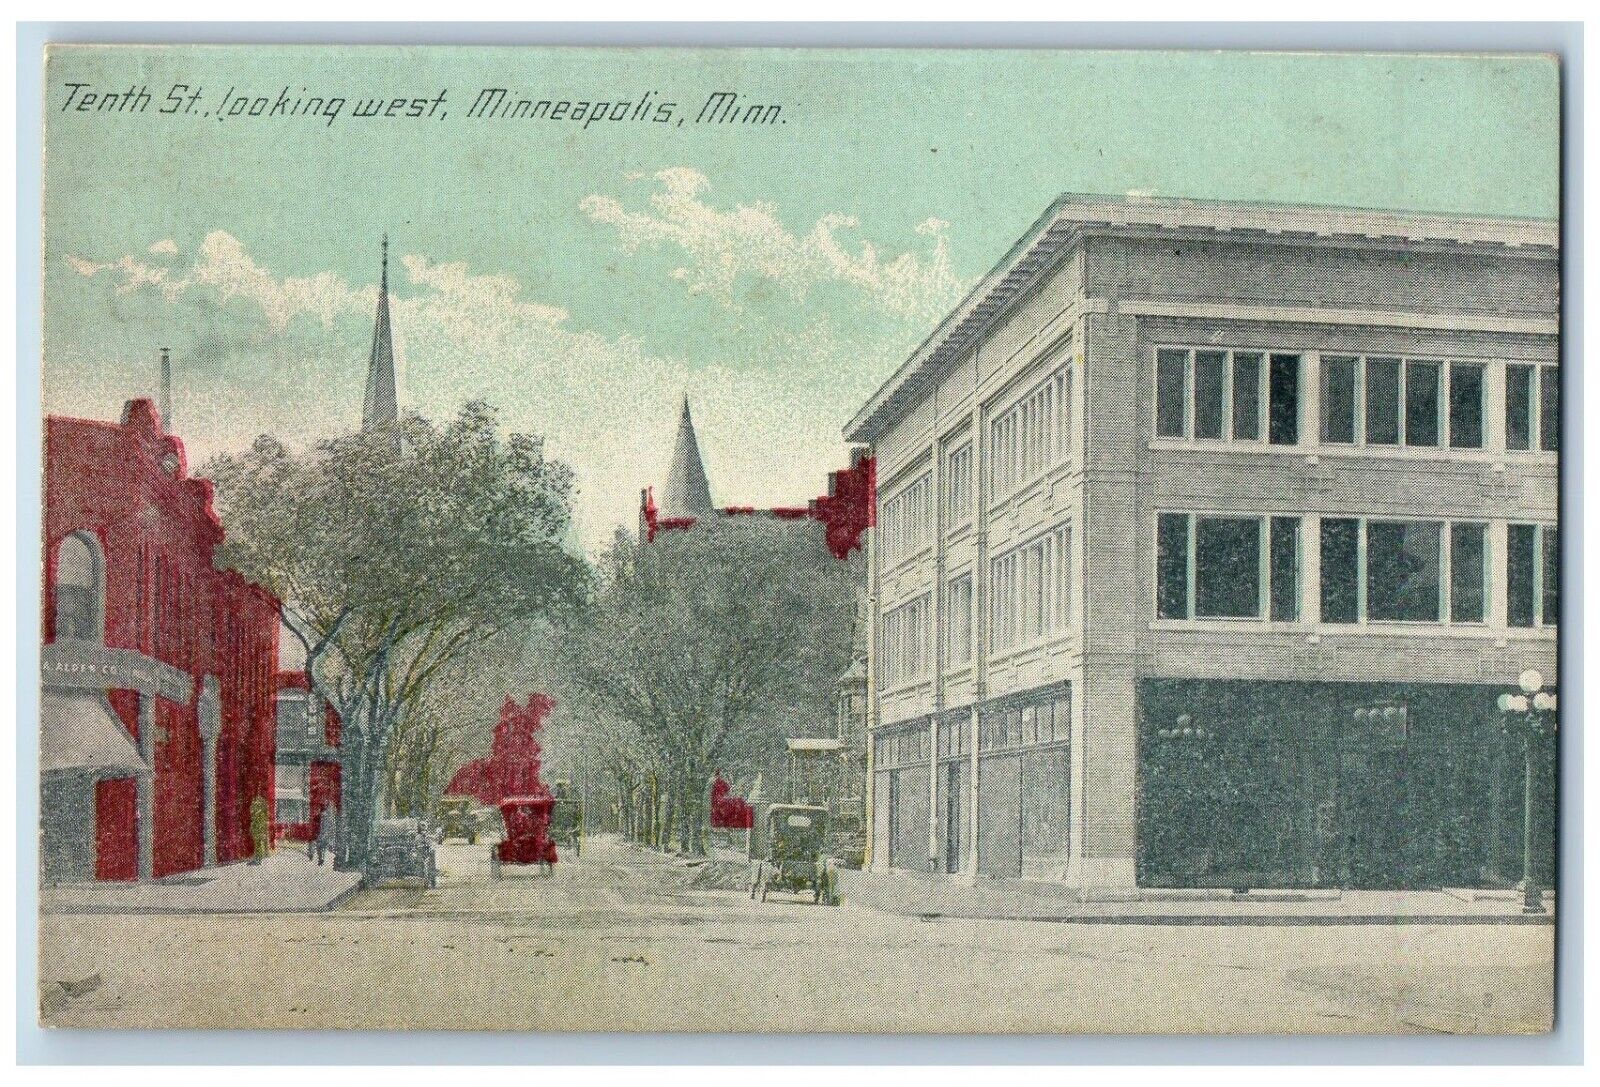 Minneapolis Minnesota MN Postcard Tenth St. Looking West c1910 Vintage Antique